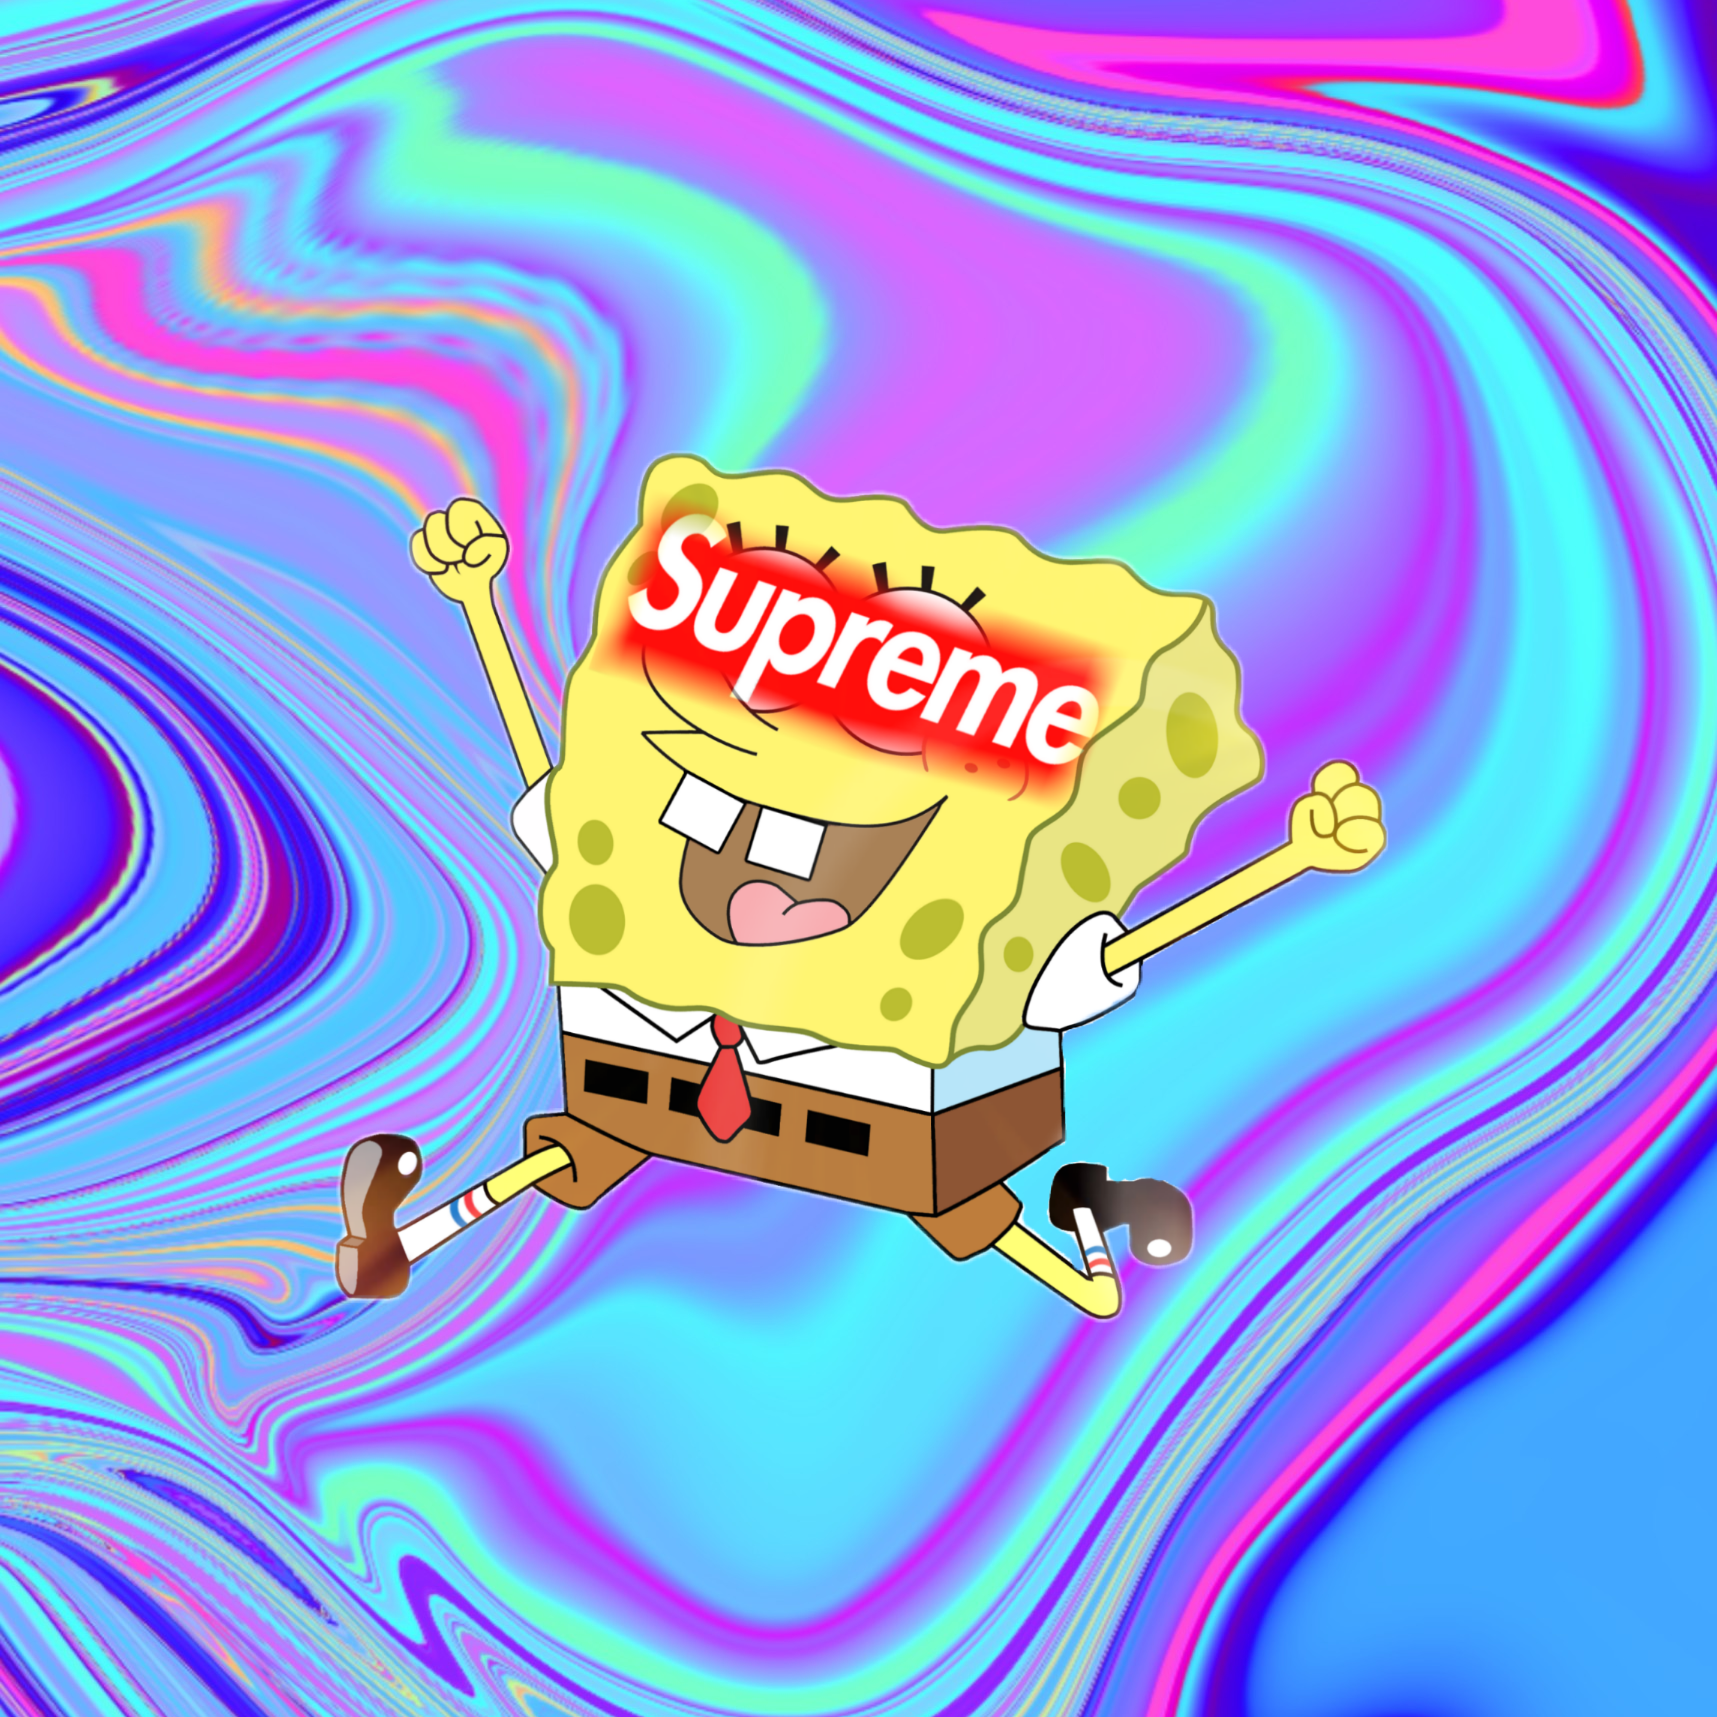 Supreme Logos Wallpaper Meme with Spongebob